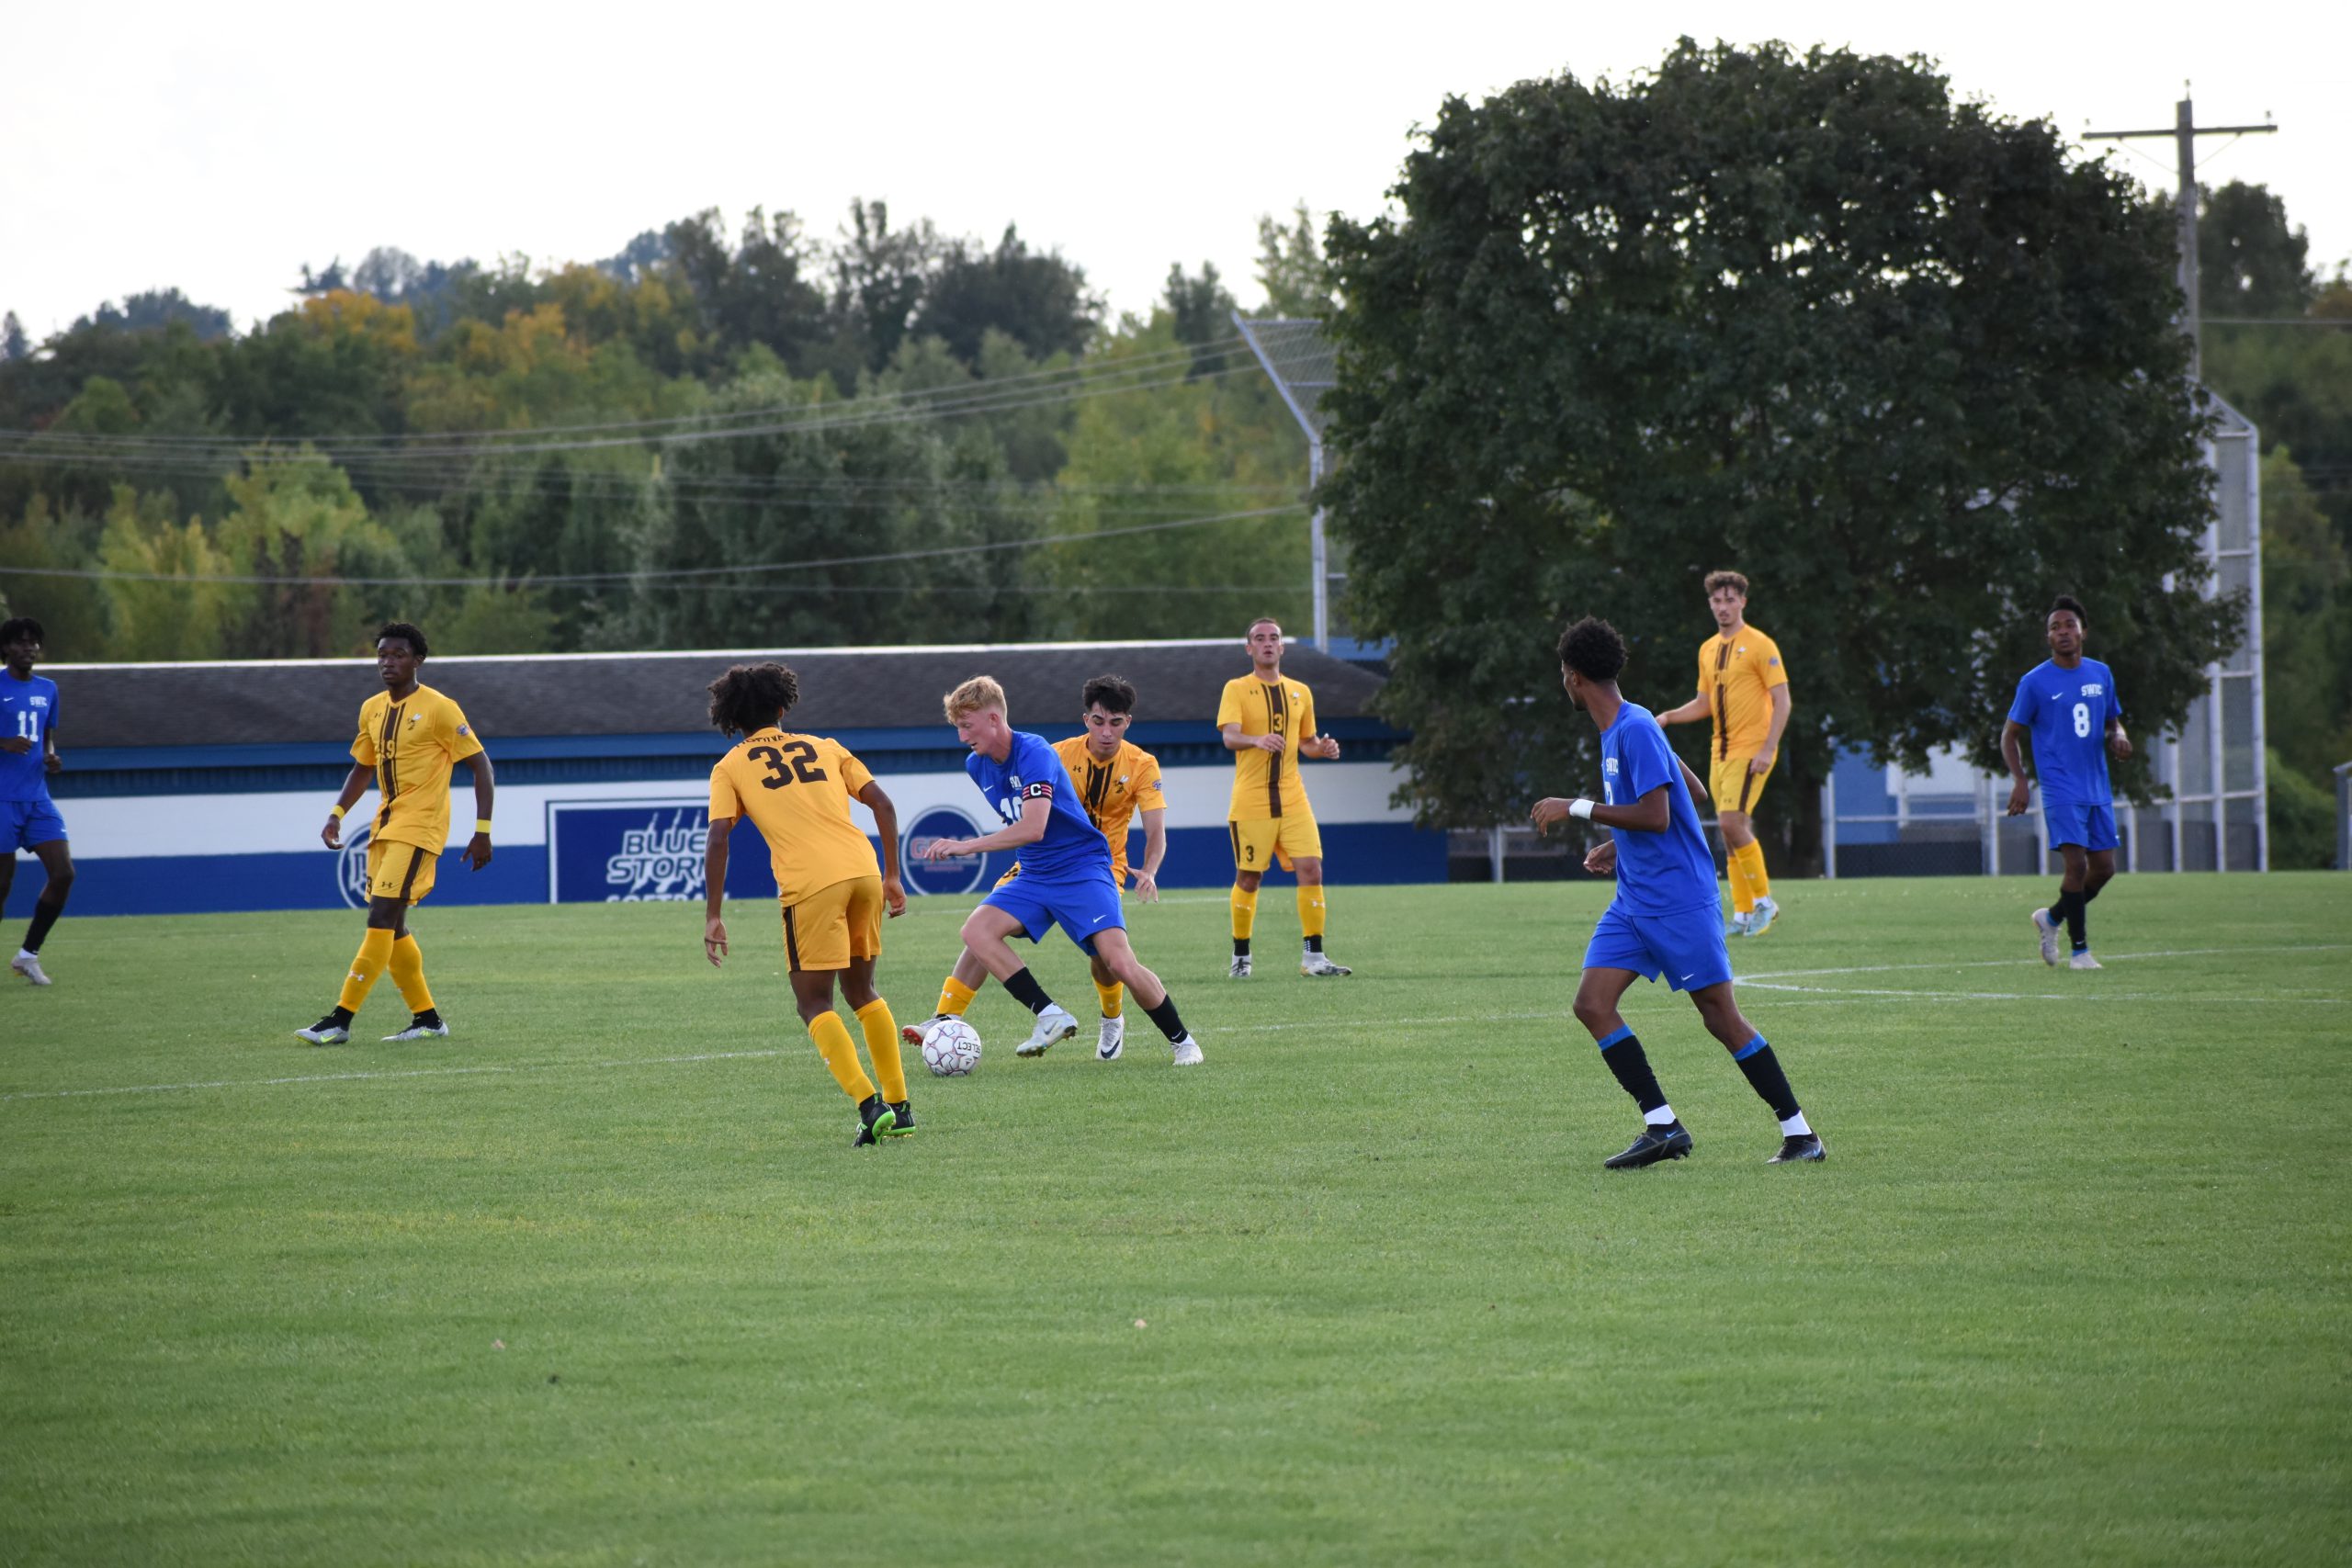 Men's Soccer on the field action shot